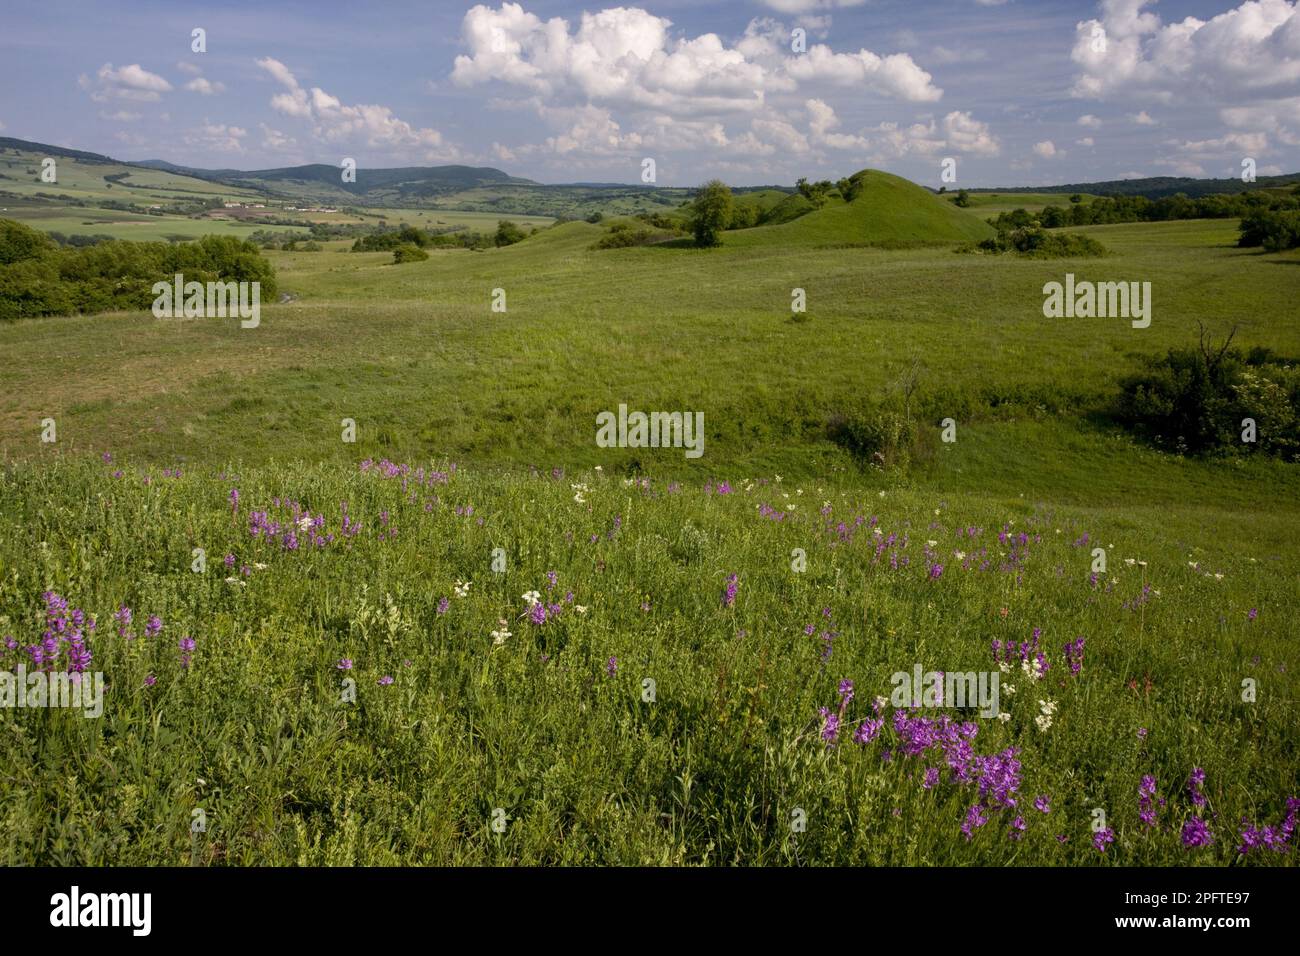 Big milkweed (Polygala major) flowering, in flower-rich, species-rich pasture habitats with humps, near Saschiz, Transylvania, Romania Stock Photo